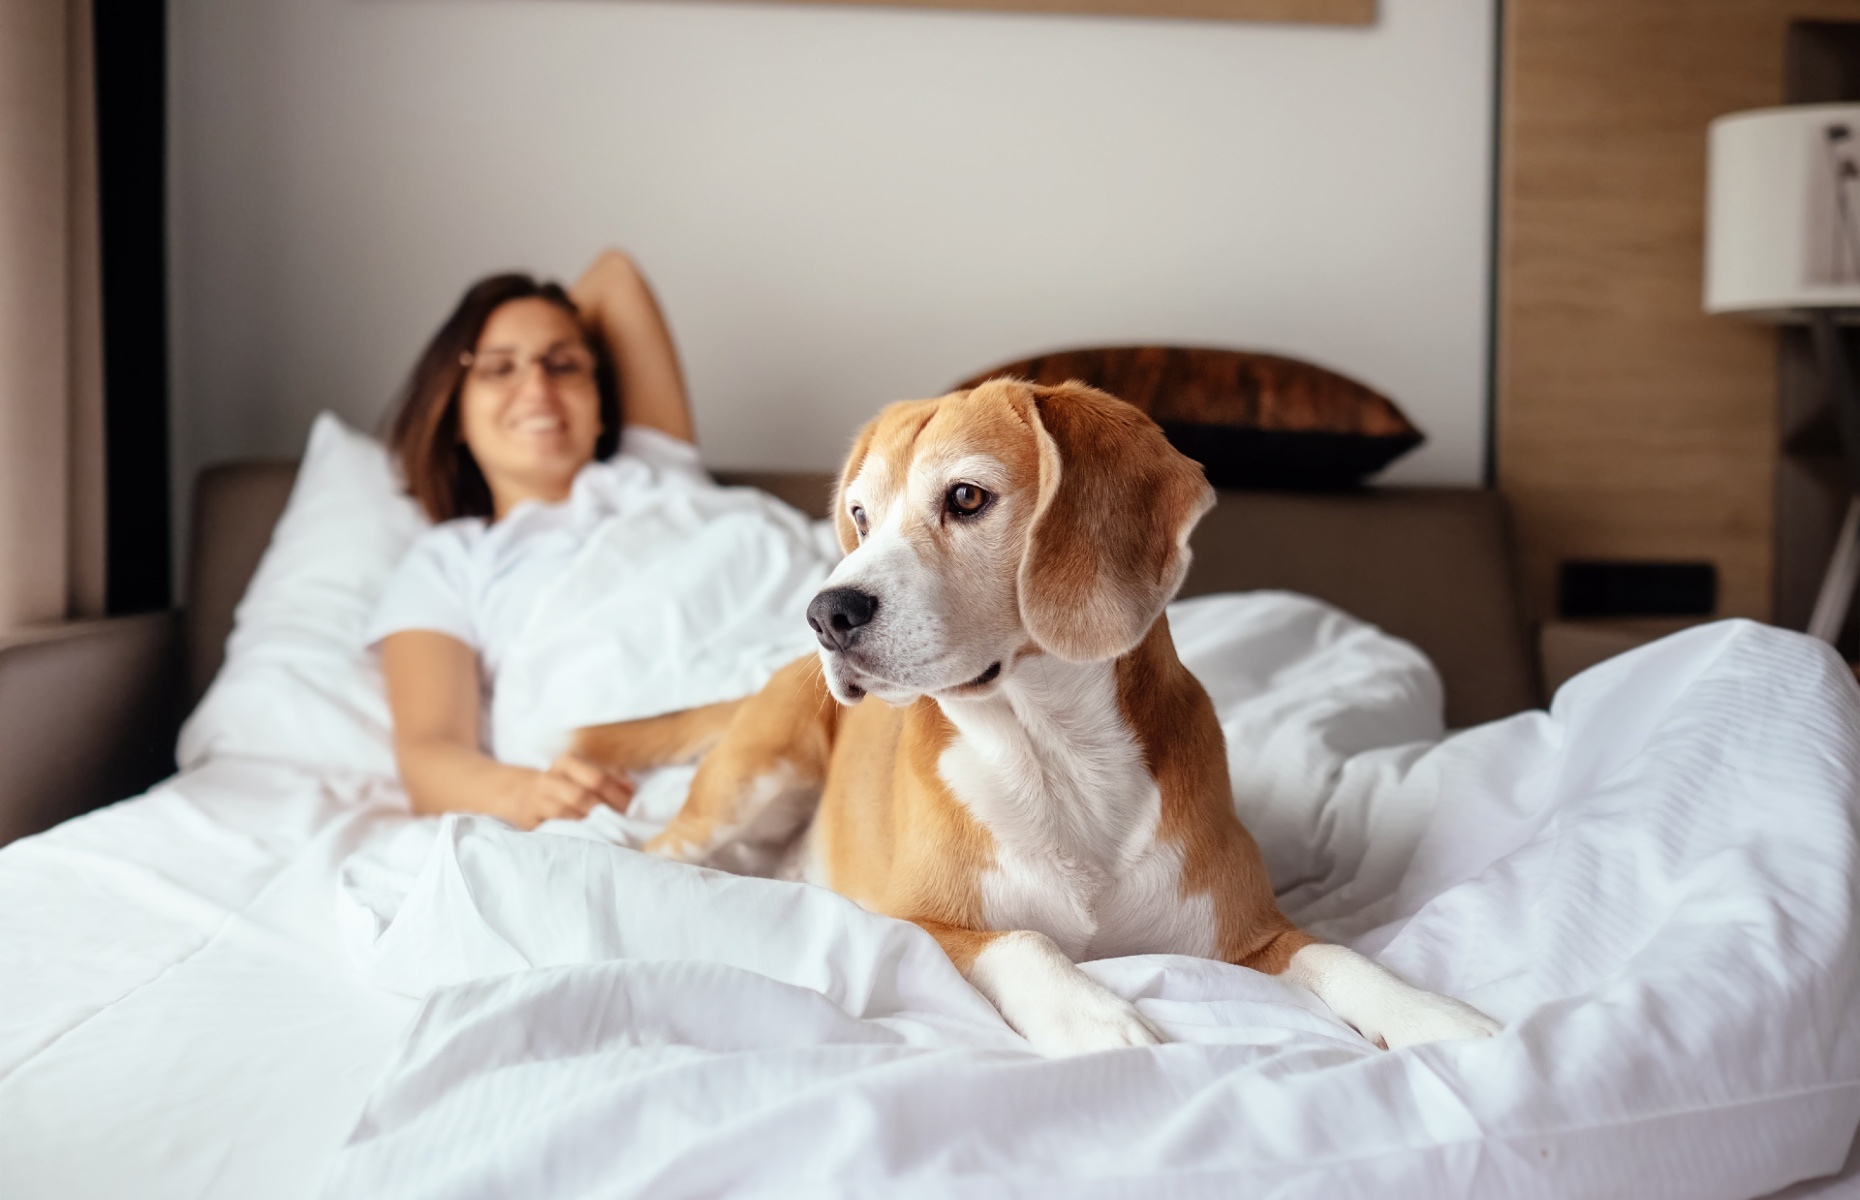 Pets in hotels (Image: Soloviova Liudmyla/Shutterstock)